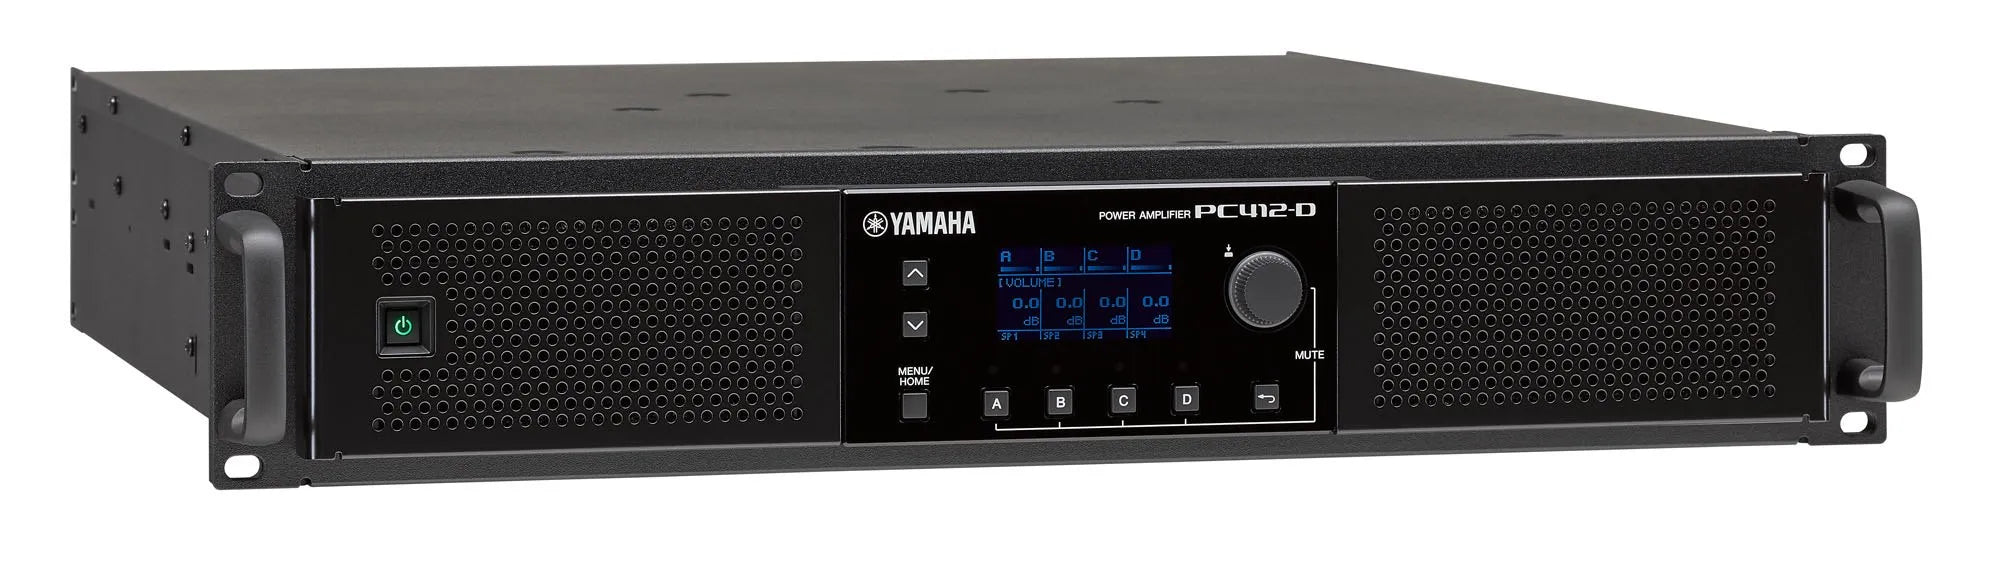 Yamaha PC412-D Power Amplifier